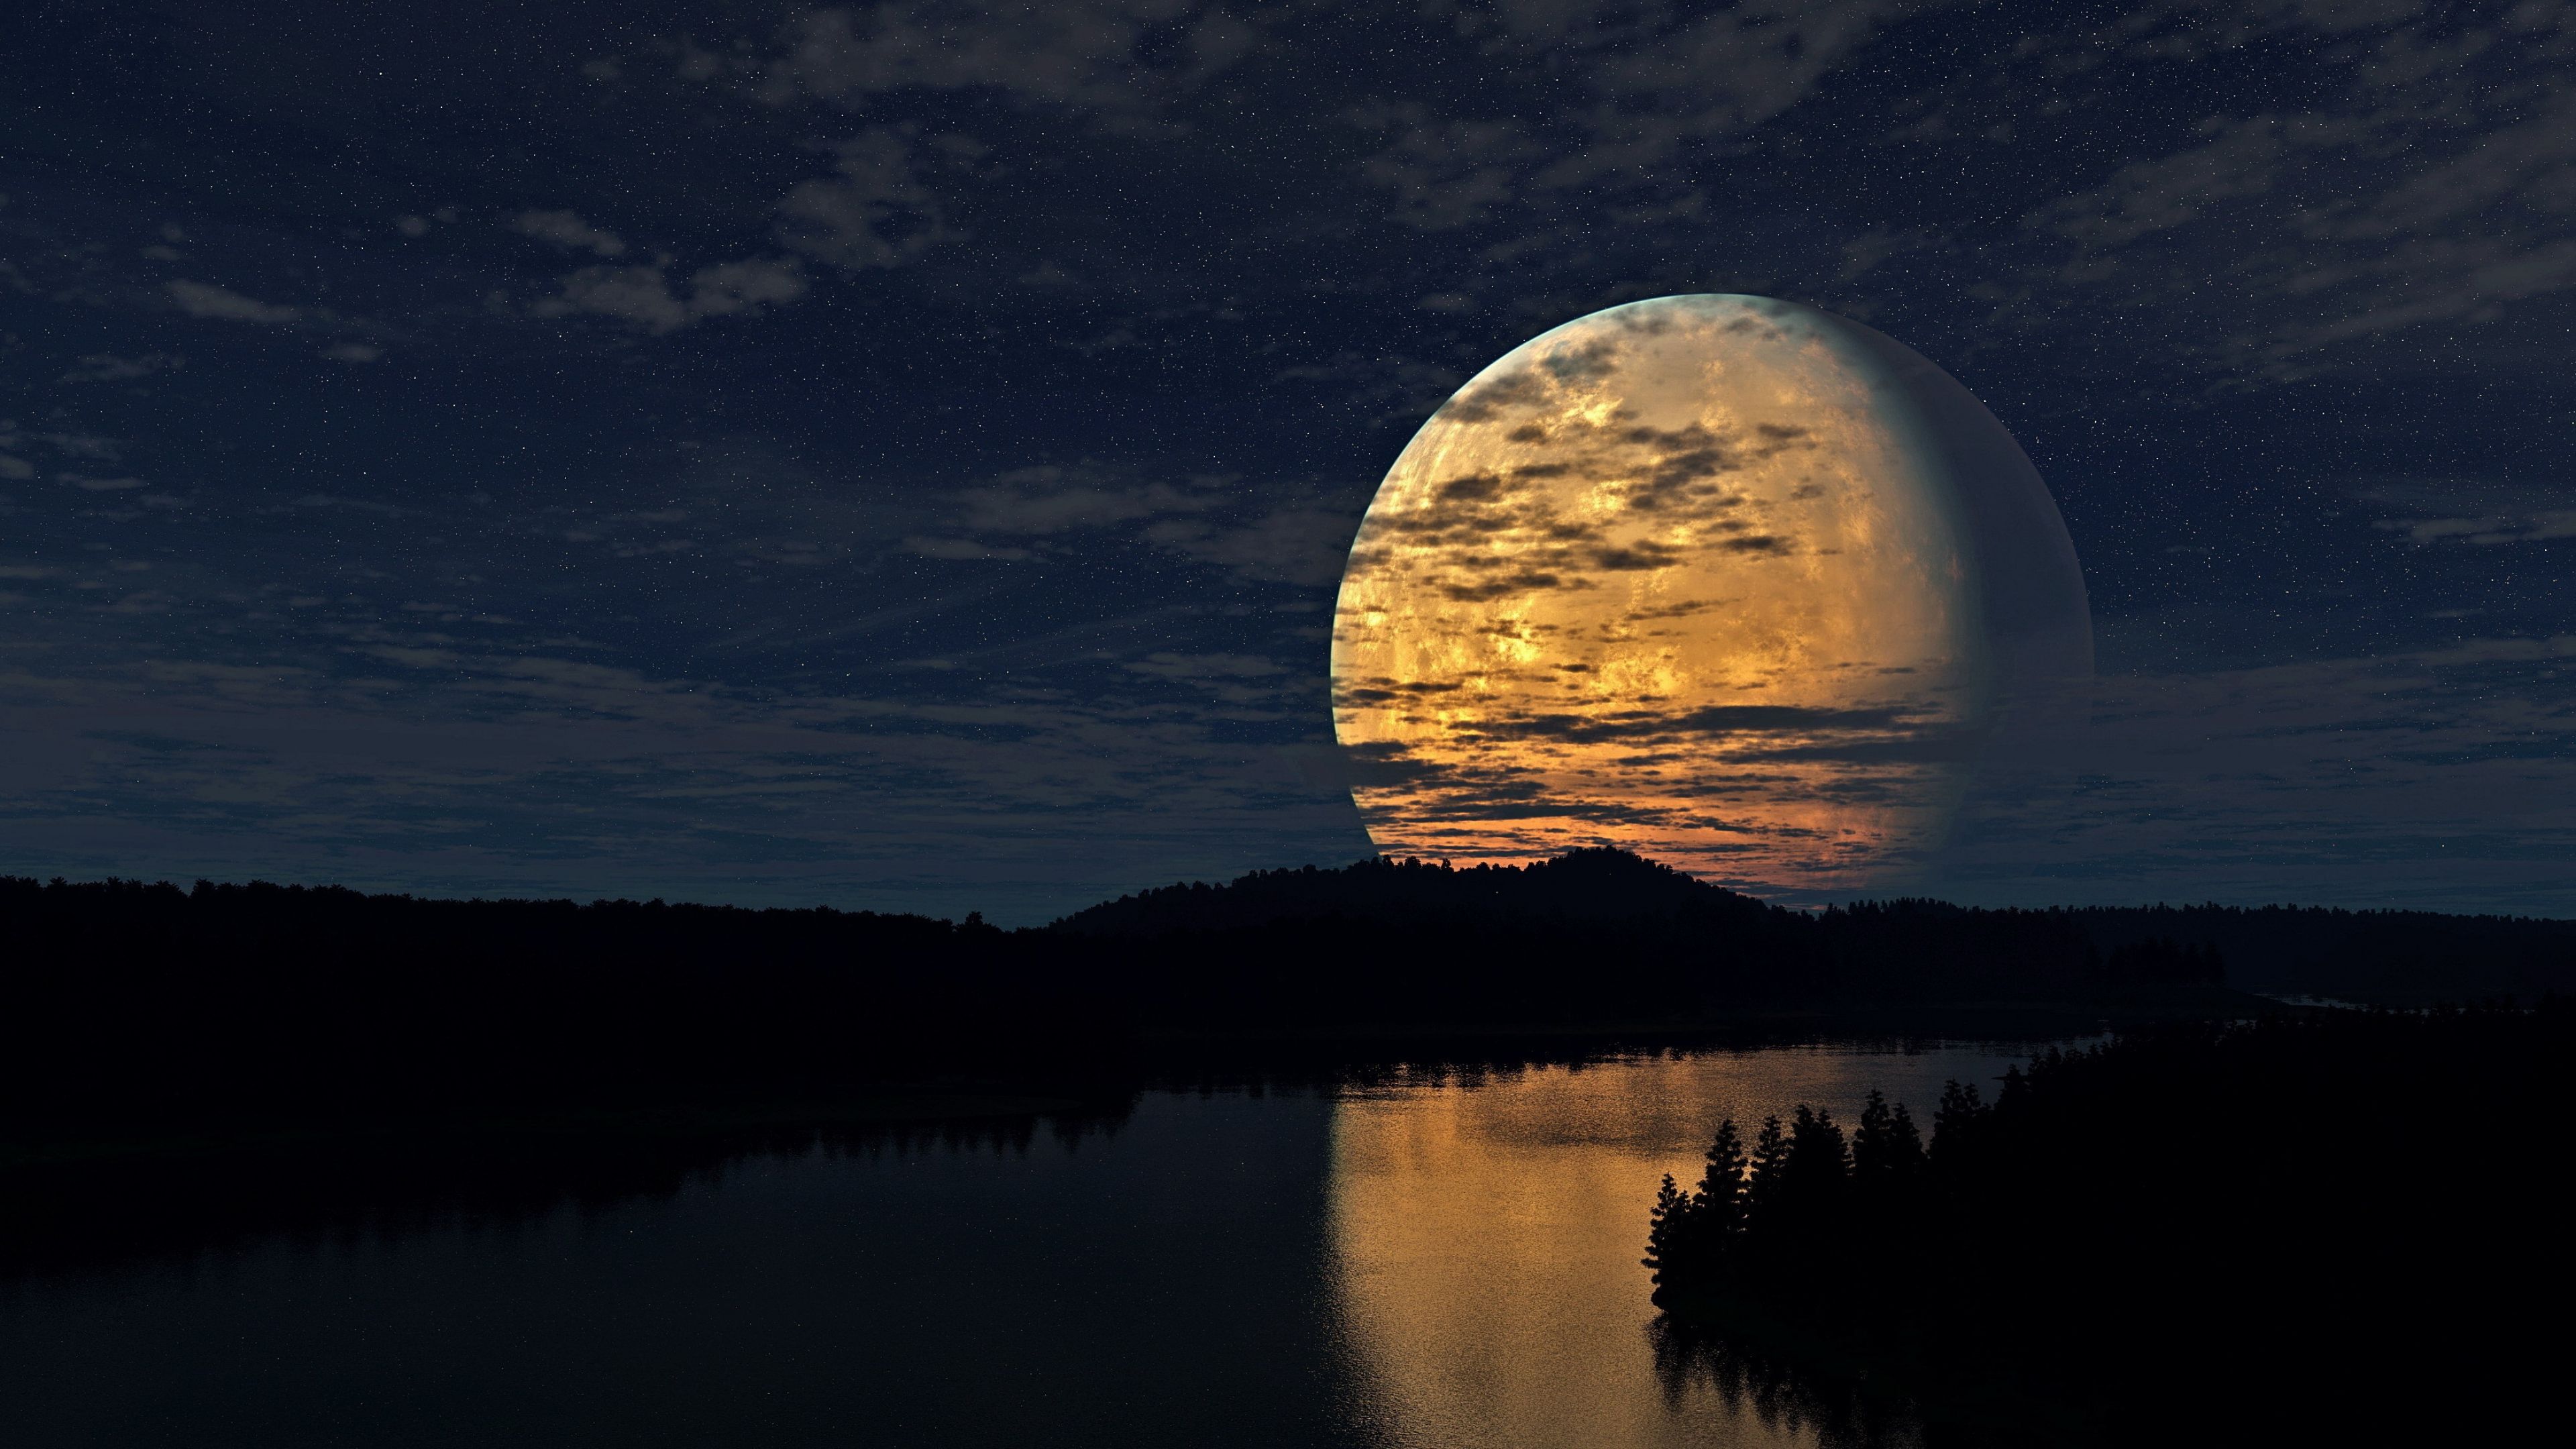 Night Sky Moon River Reflection, HD Nature, 4k Wallpaper, Image